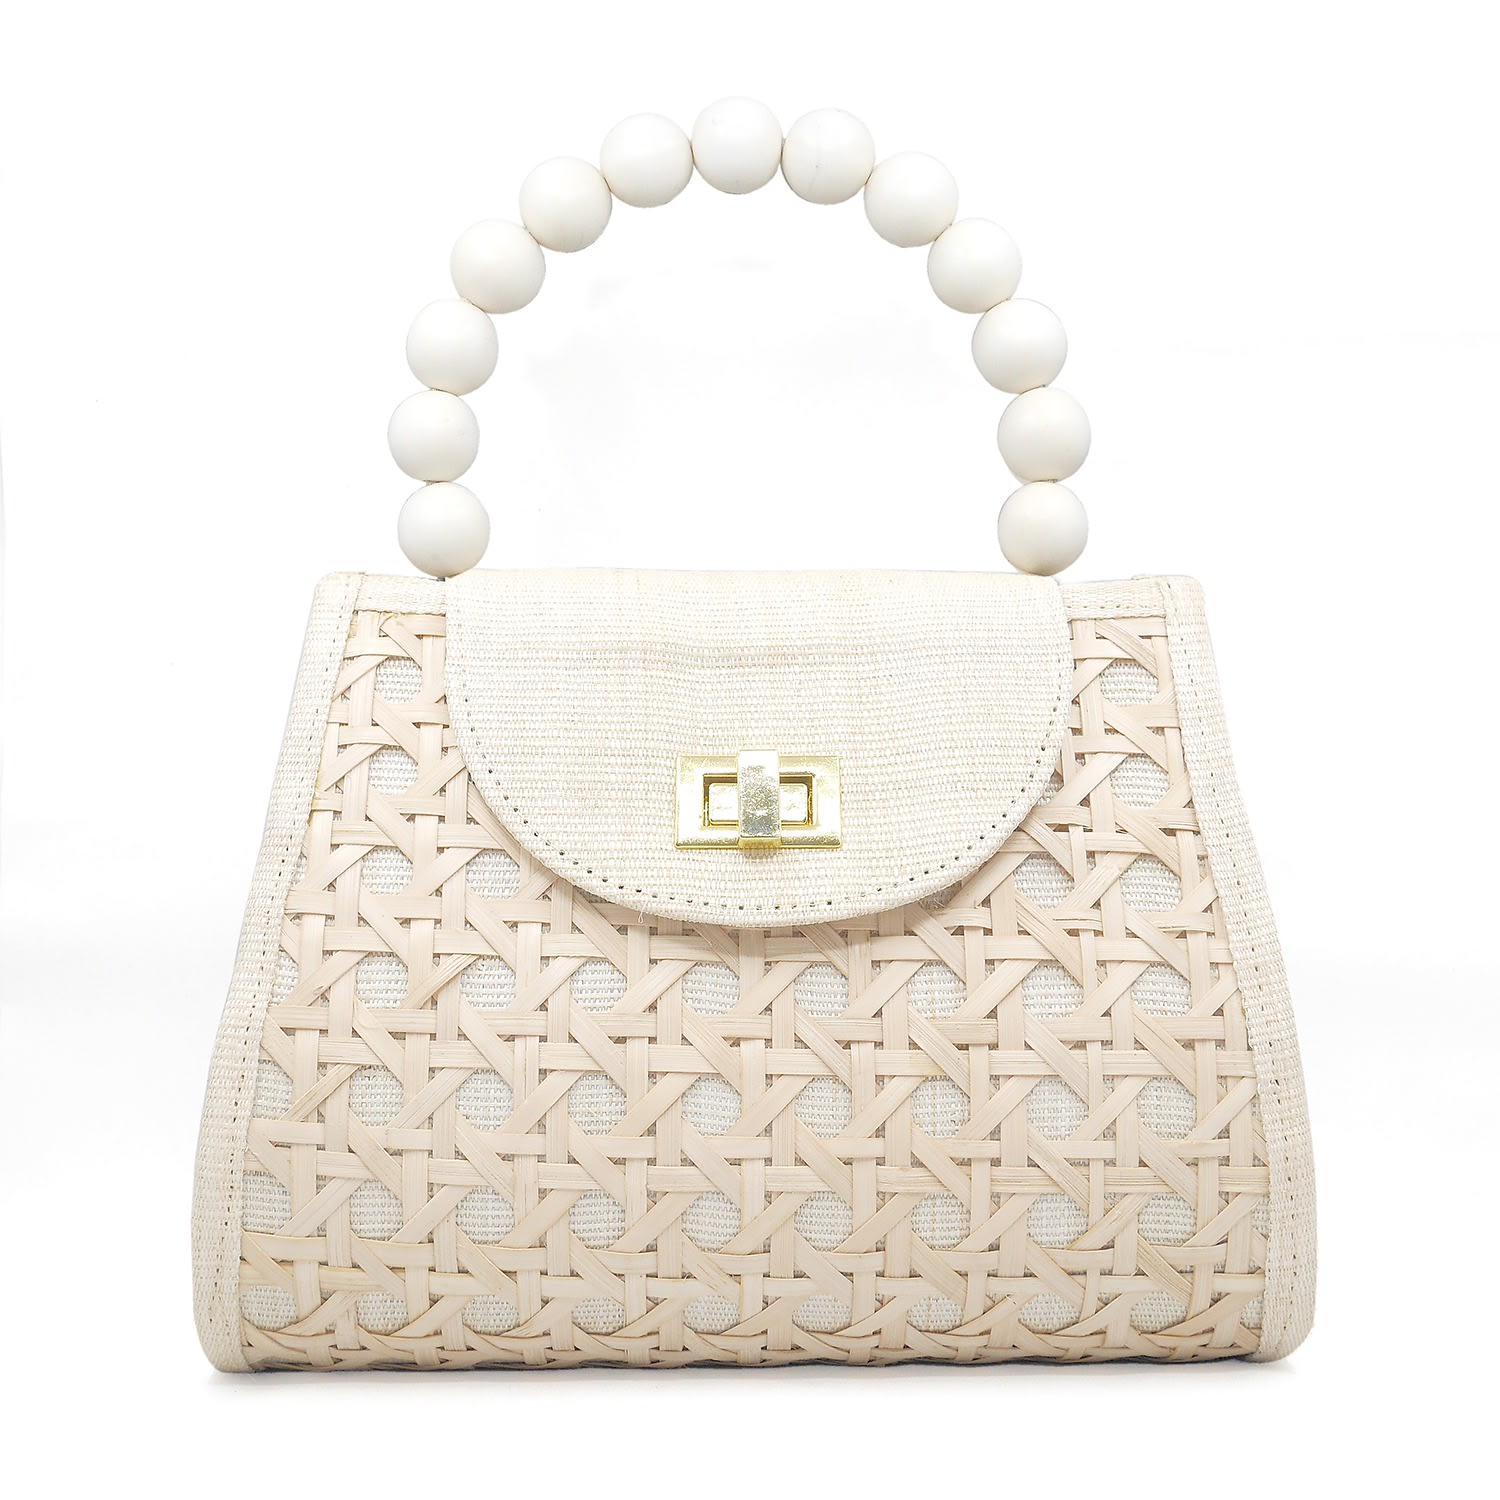 Soli & Sun - The Sienna White & Cream Rattan Woven Handbag